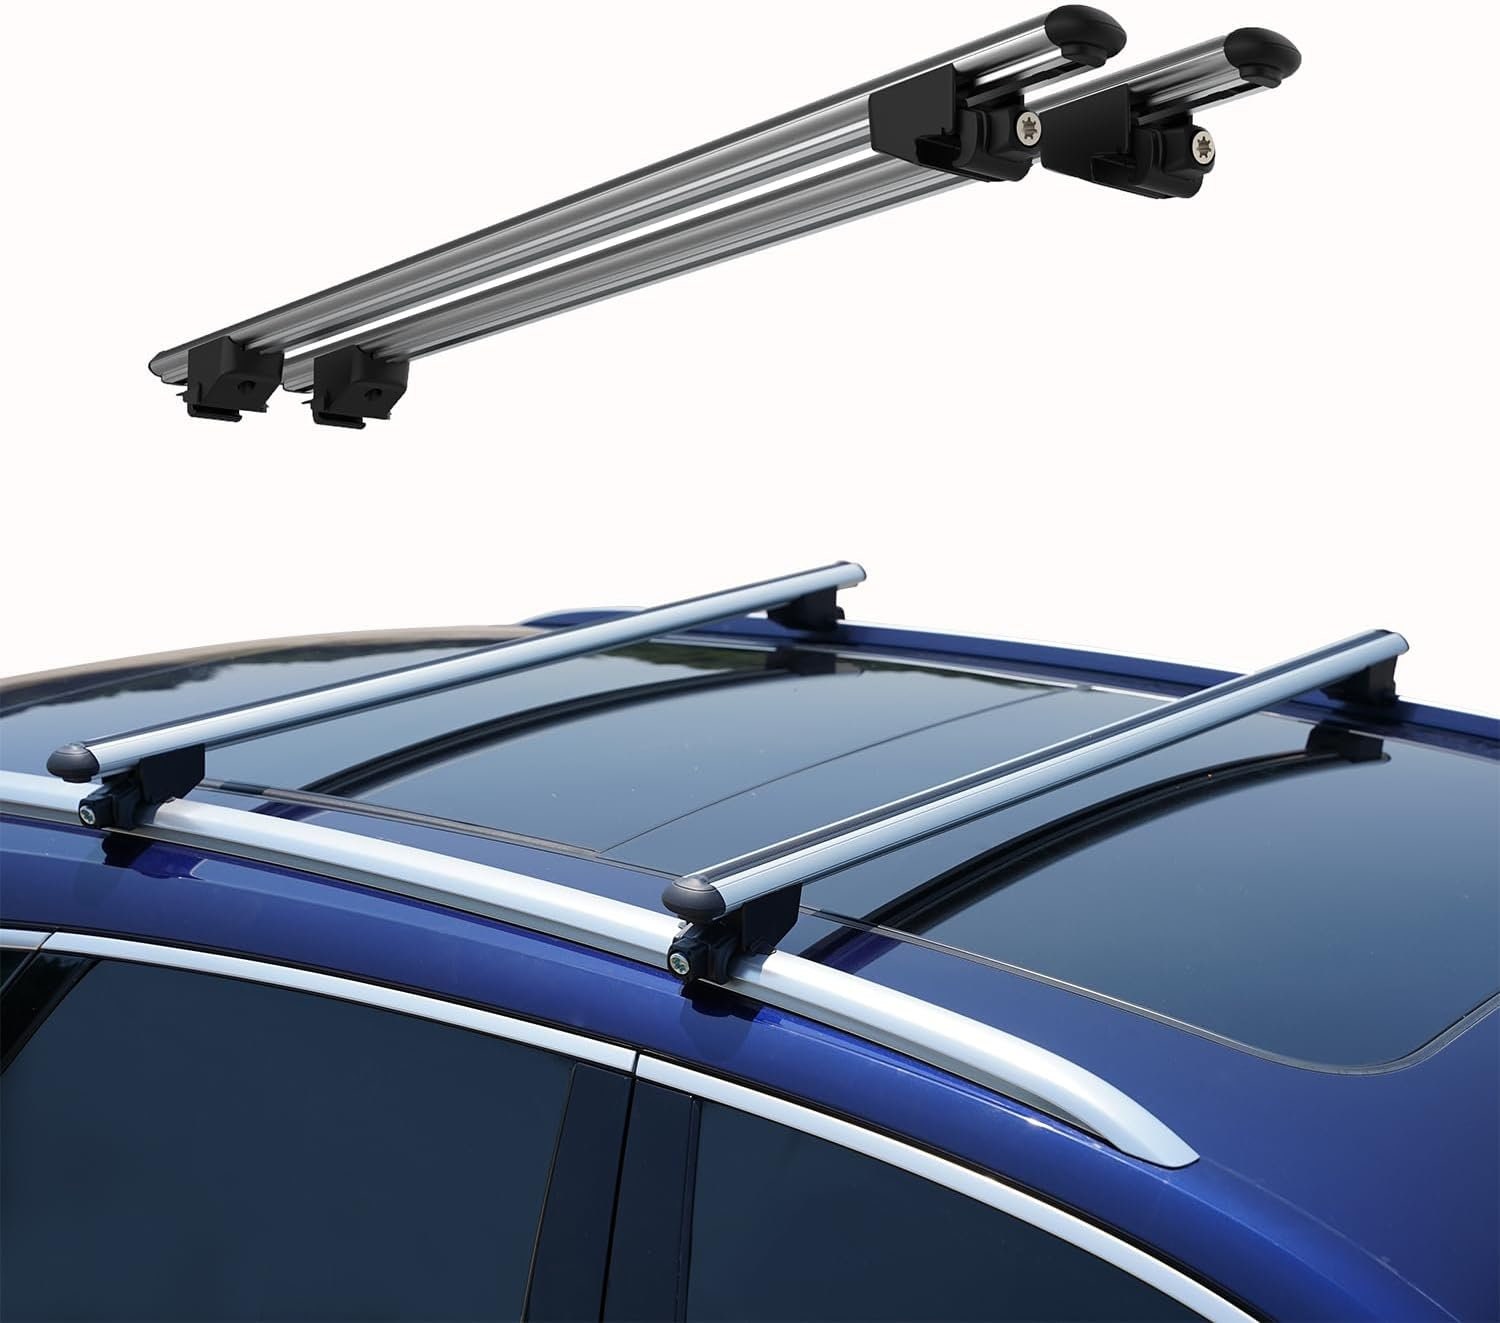  king of car tuning Silver Crossbars Cross Bars Roof Rail Racks  Fits for BMW X3 F25 2011-2017 : Automotive